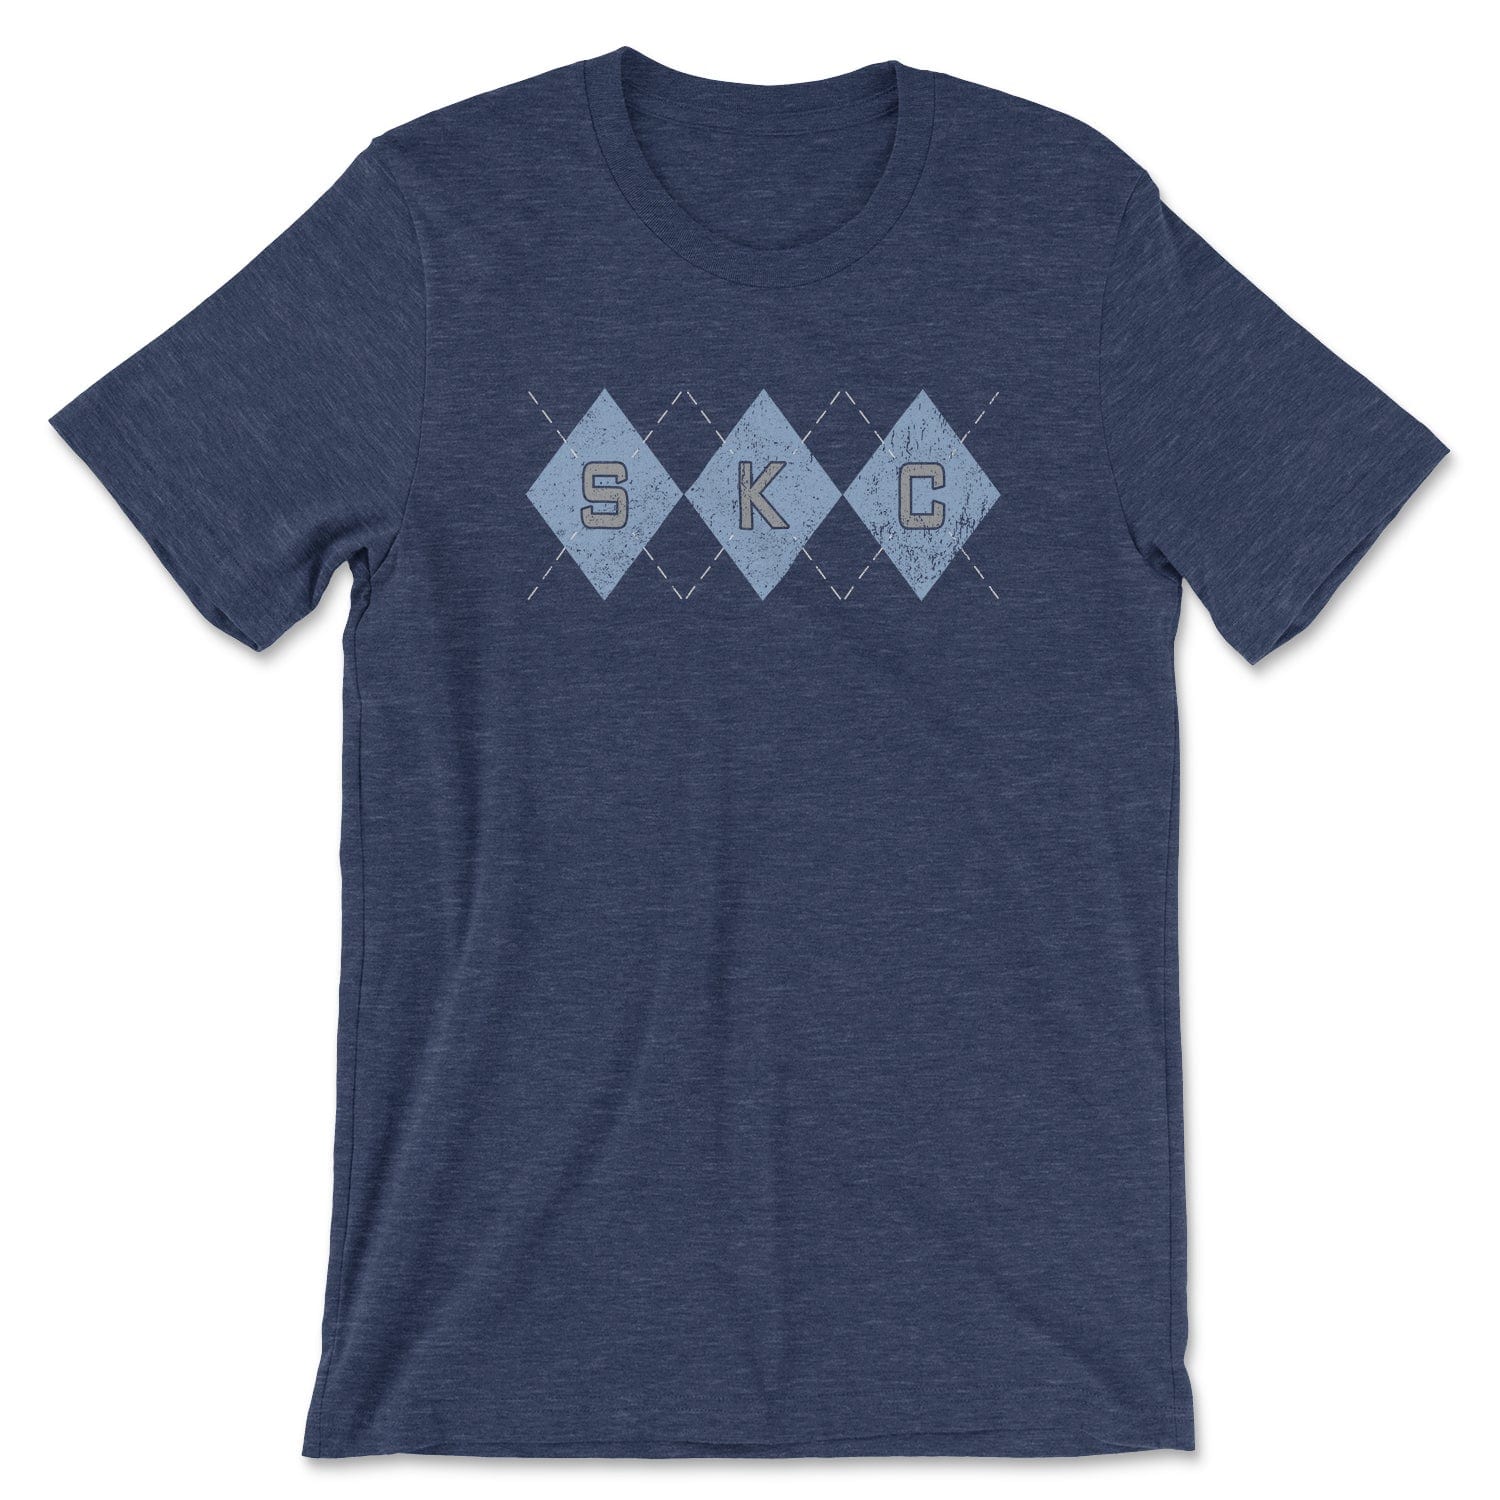 KC Swag Sporting Kansas City powder blue/navy/grey SKC DIAMONDS with argyle stitching on heather navy t-shirt